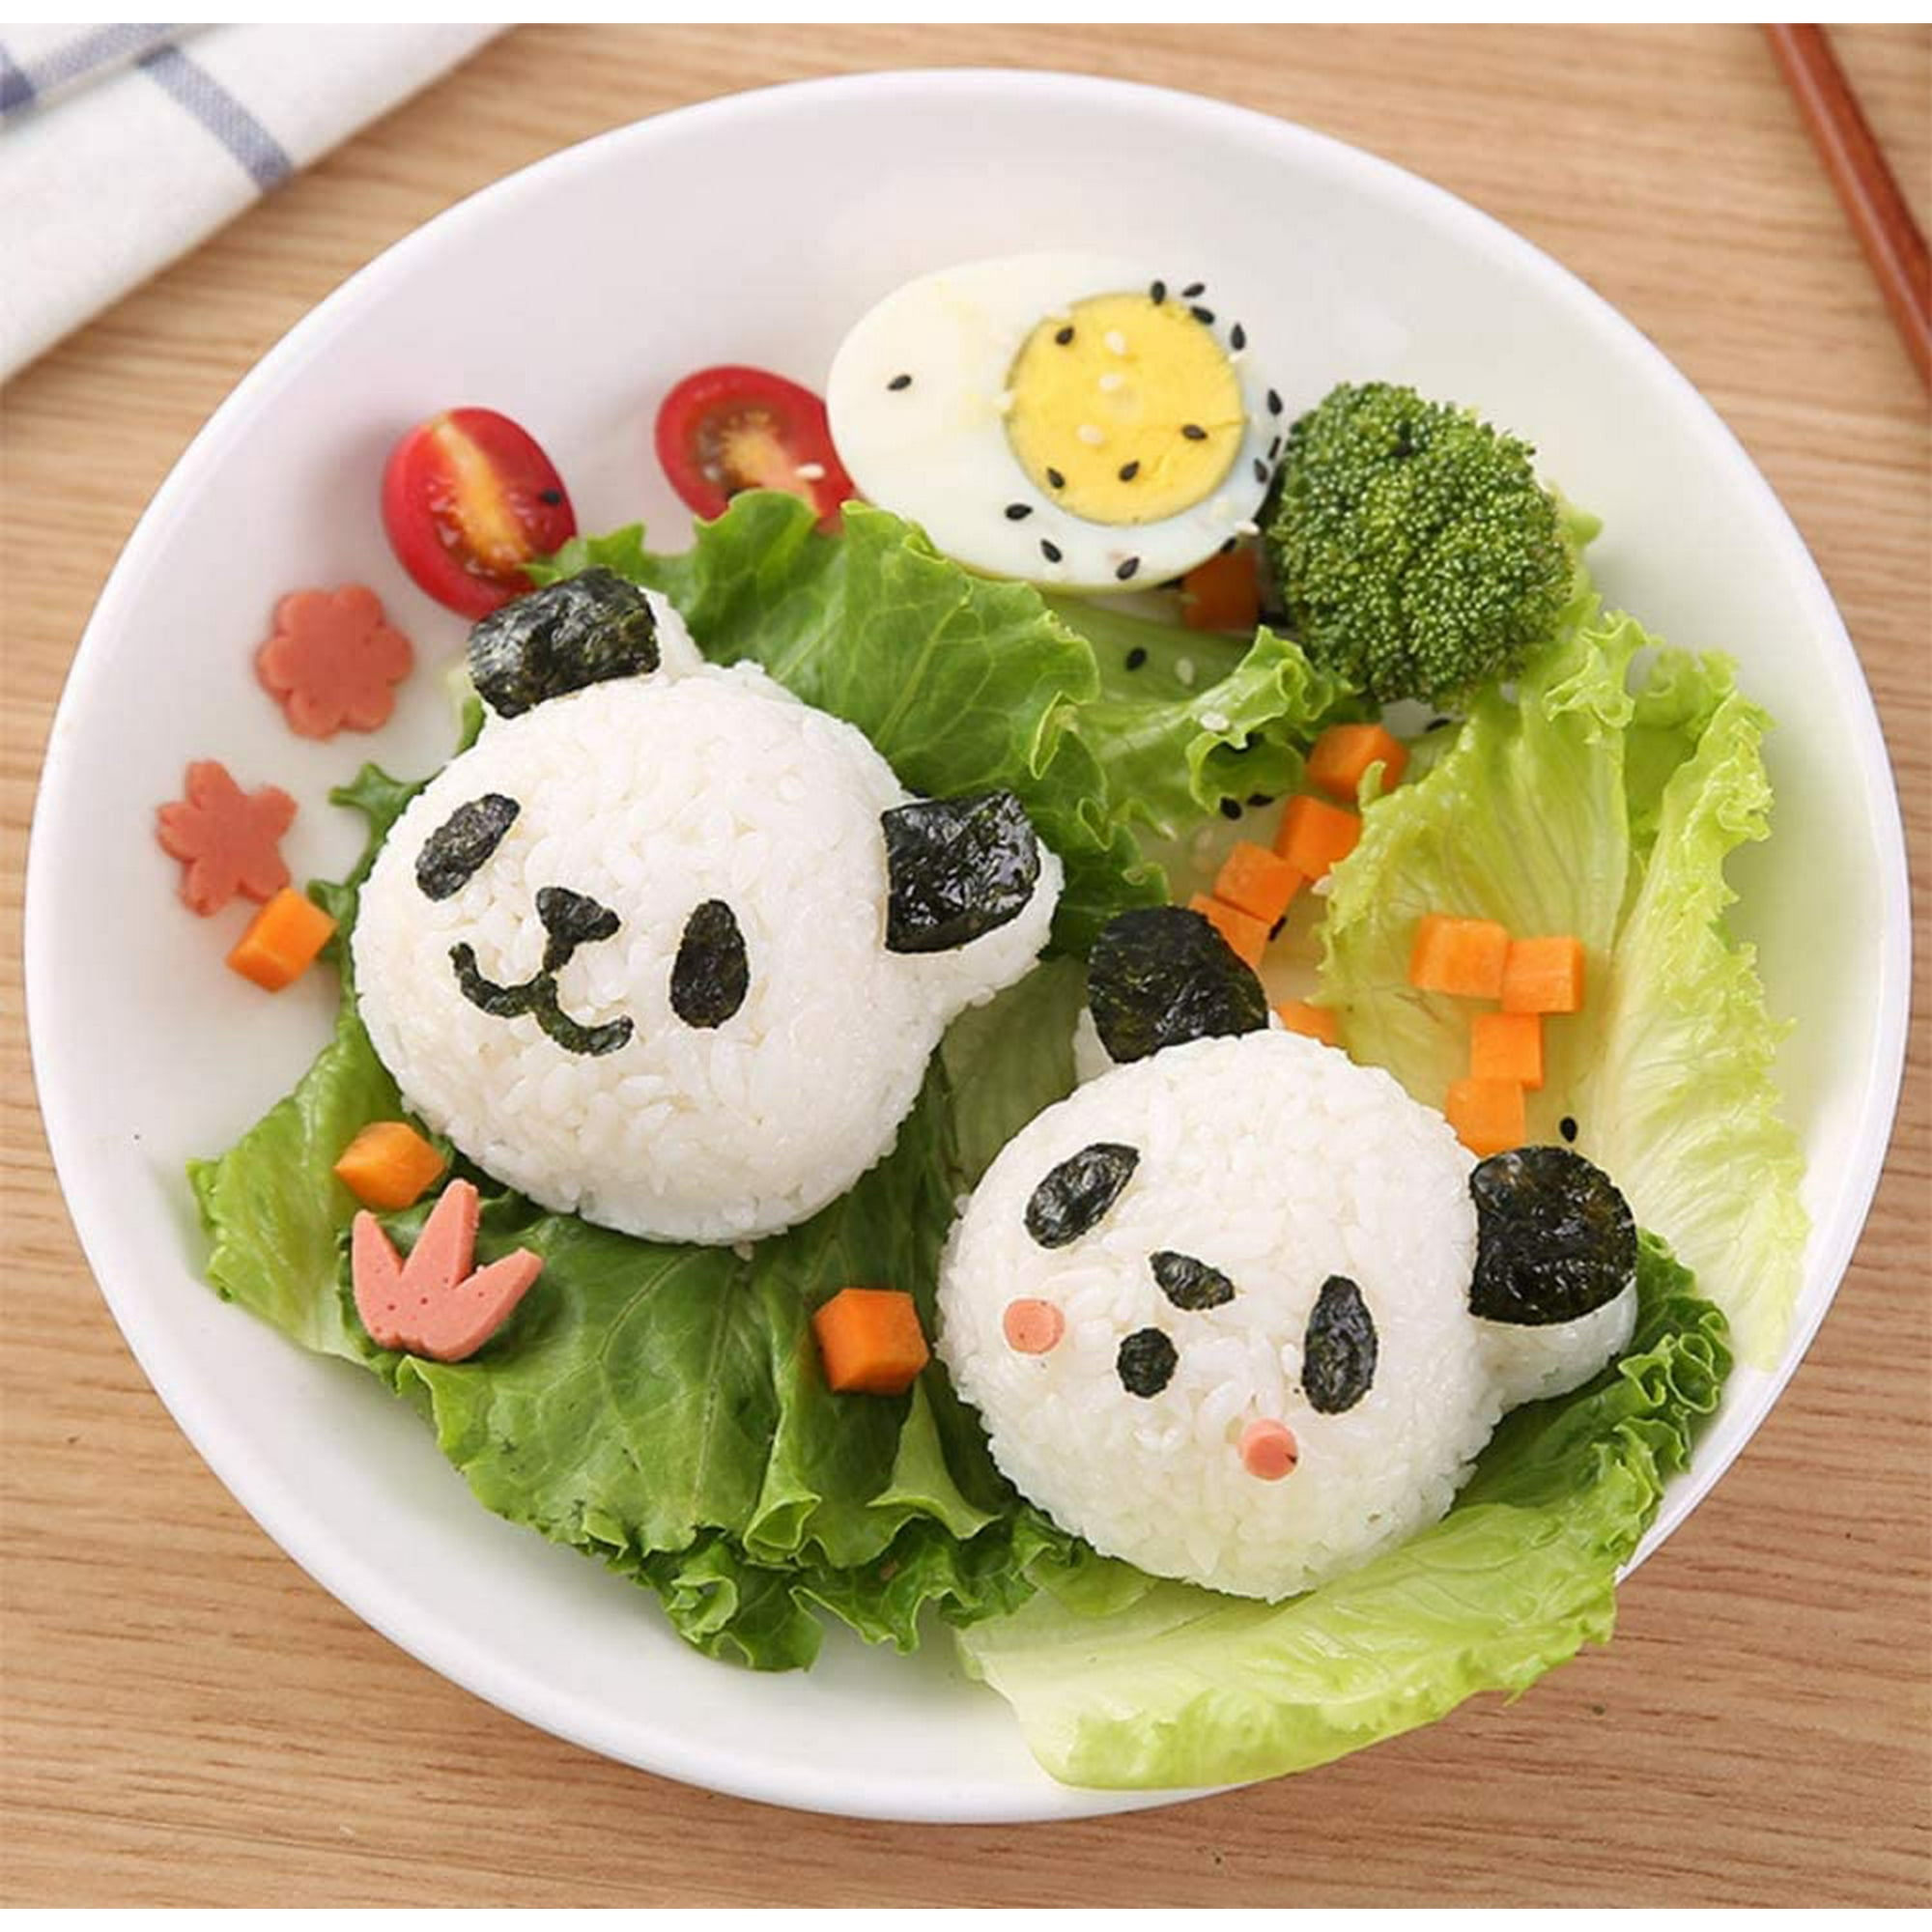 Onigiri Rice Ball Case Maker Animals Black & White  2pcs Set Lunch box  BENTO 